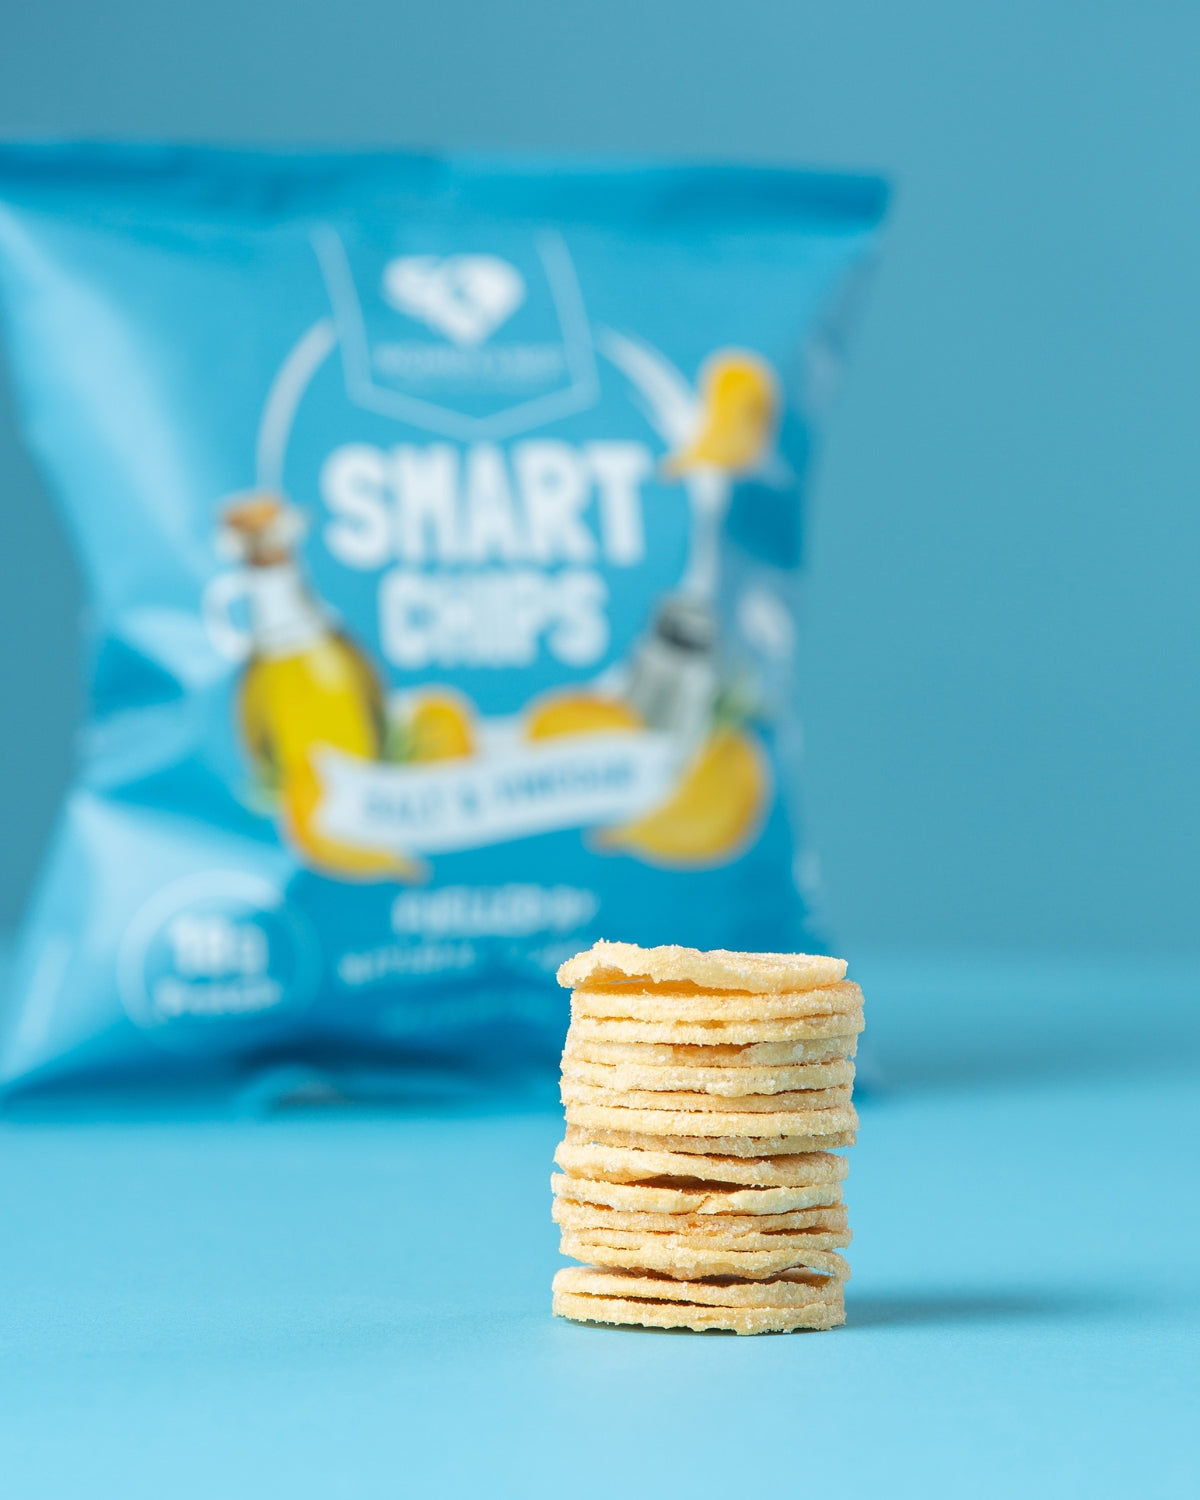 Smart Chips 40g Women's Best